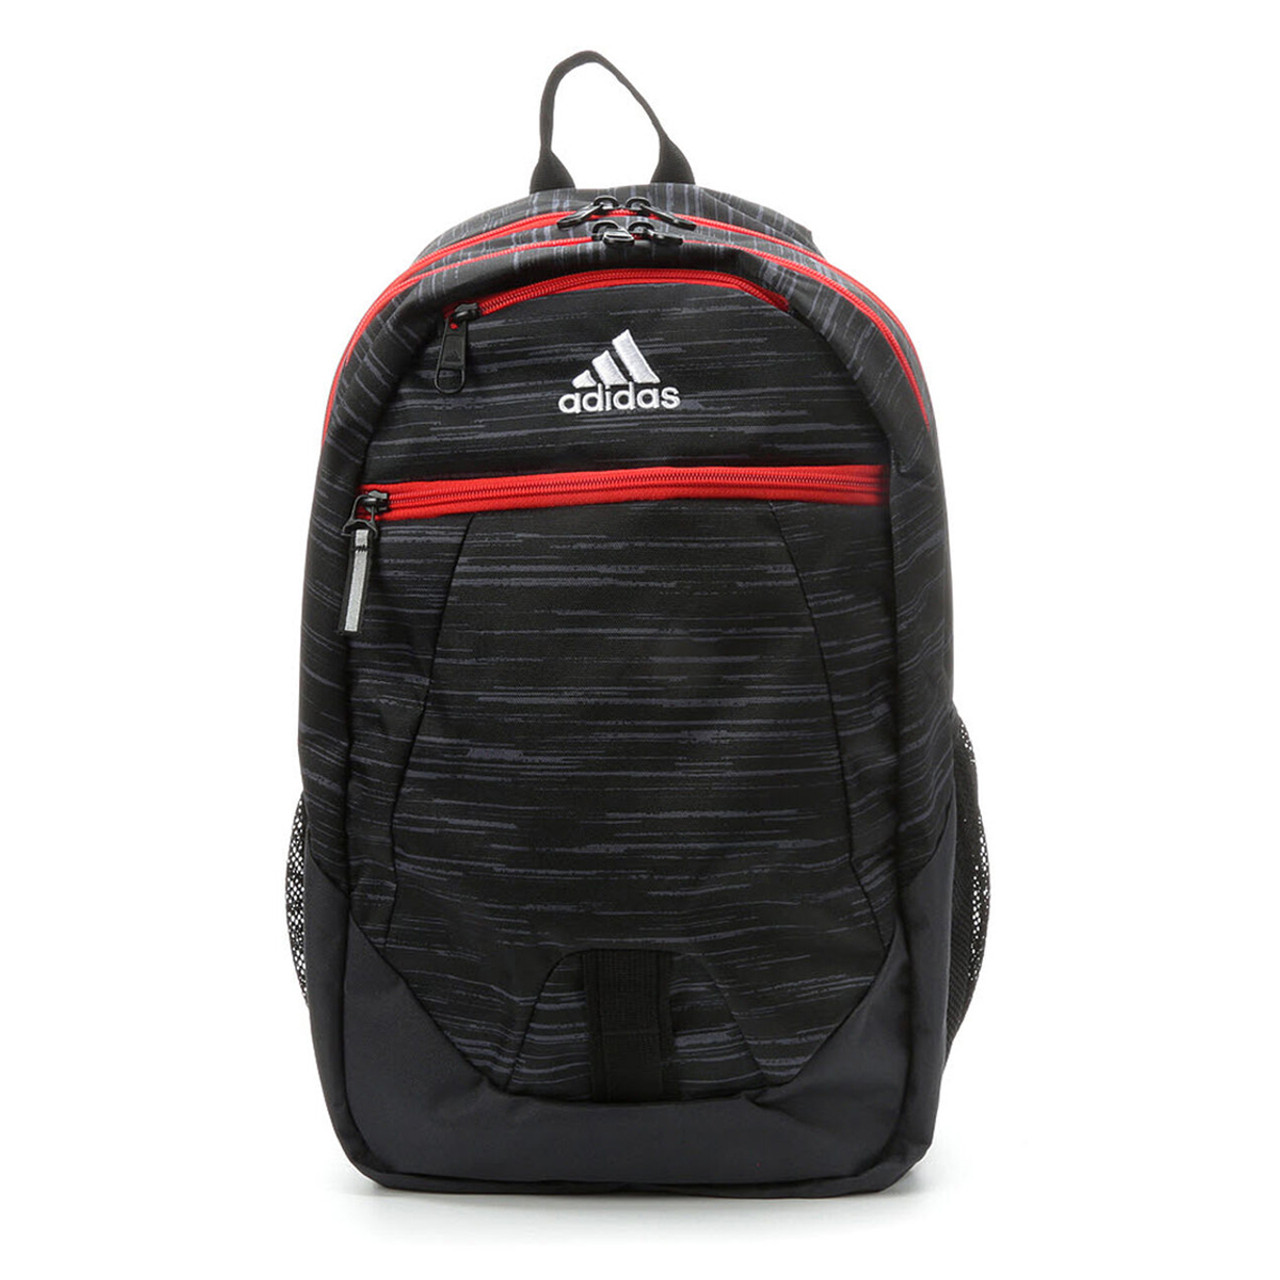 adidas foundation v backpack